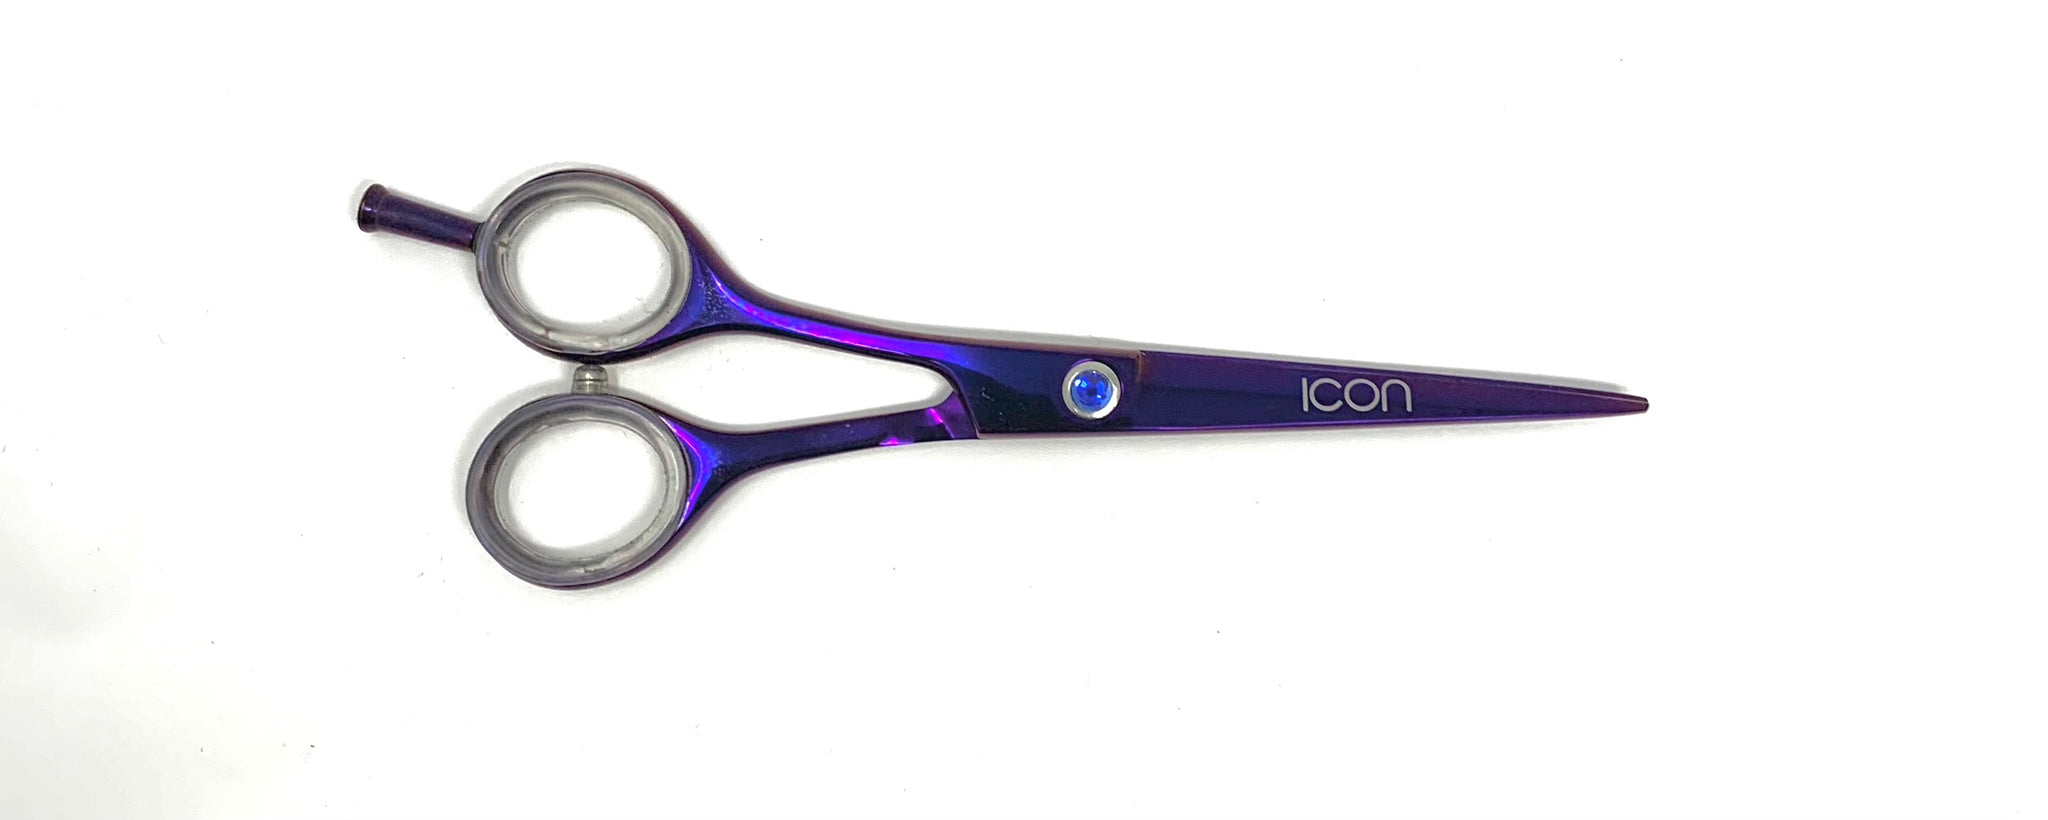 icon purple left handed professional shears cosmetology salon stylist scissors